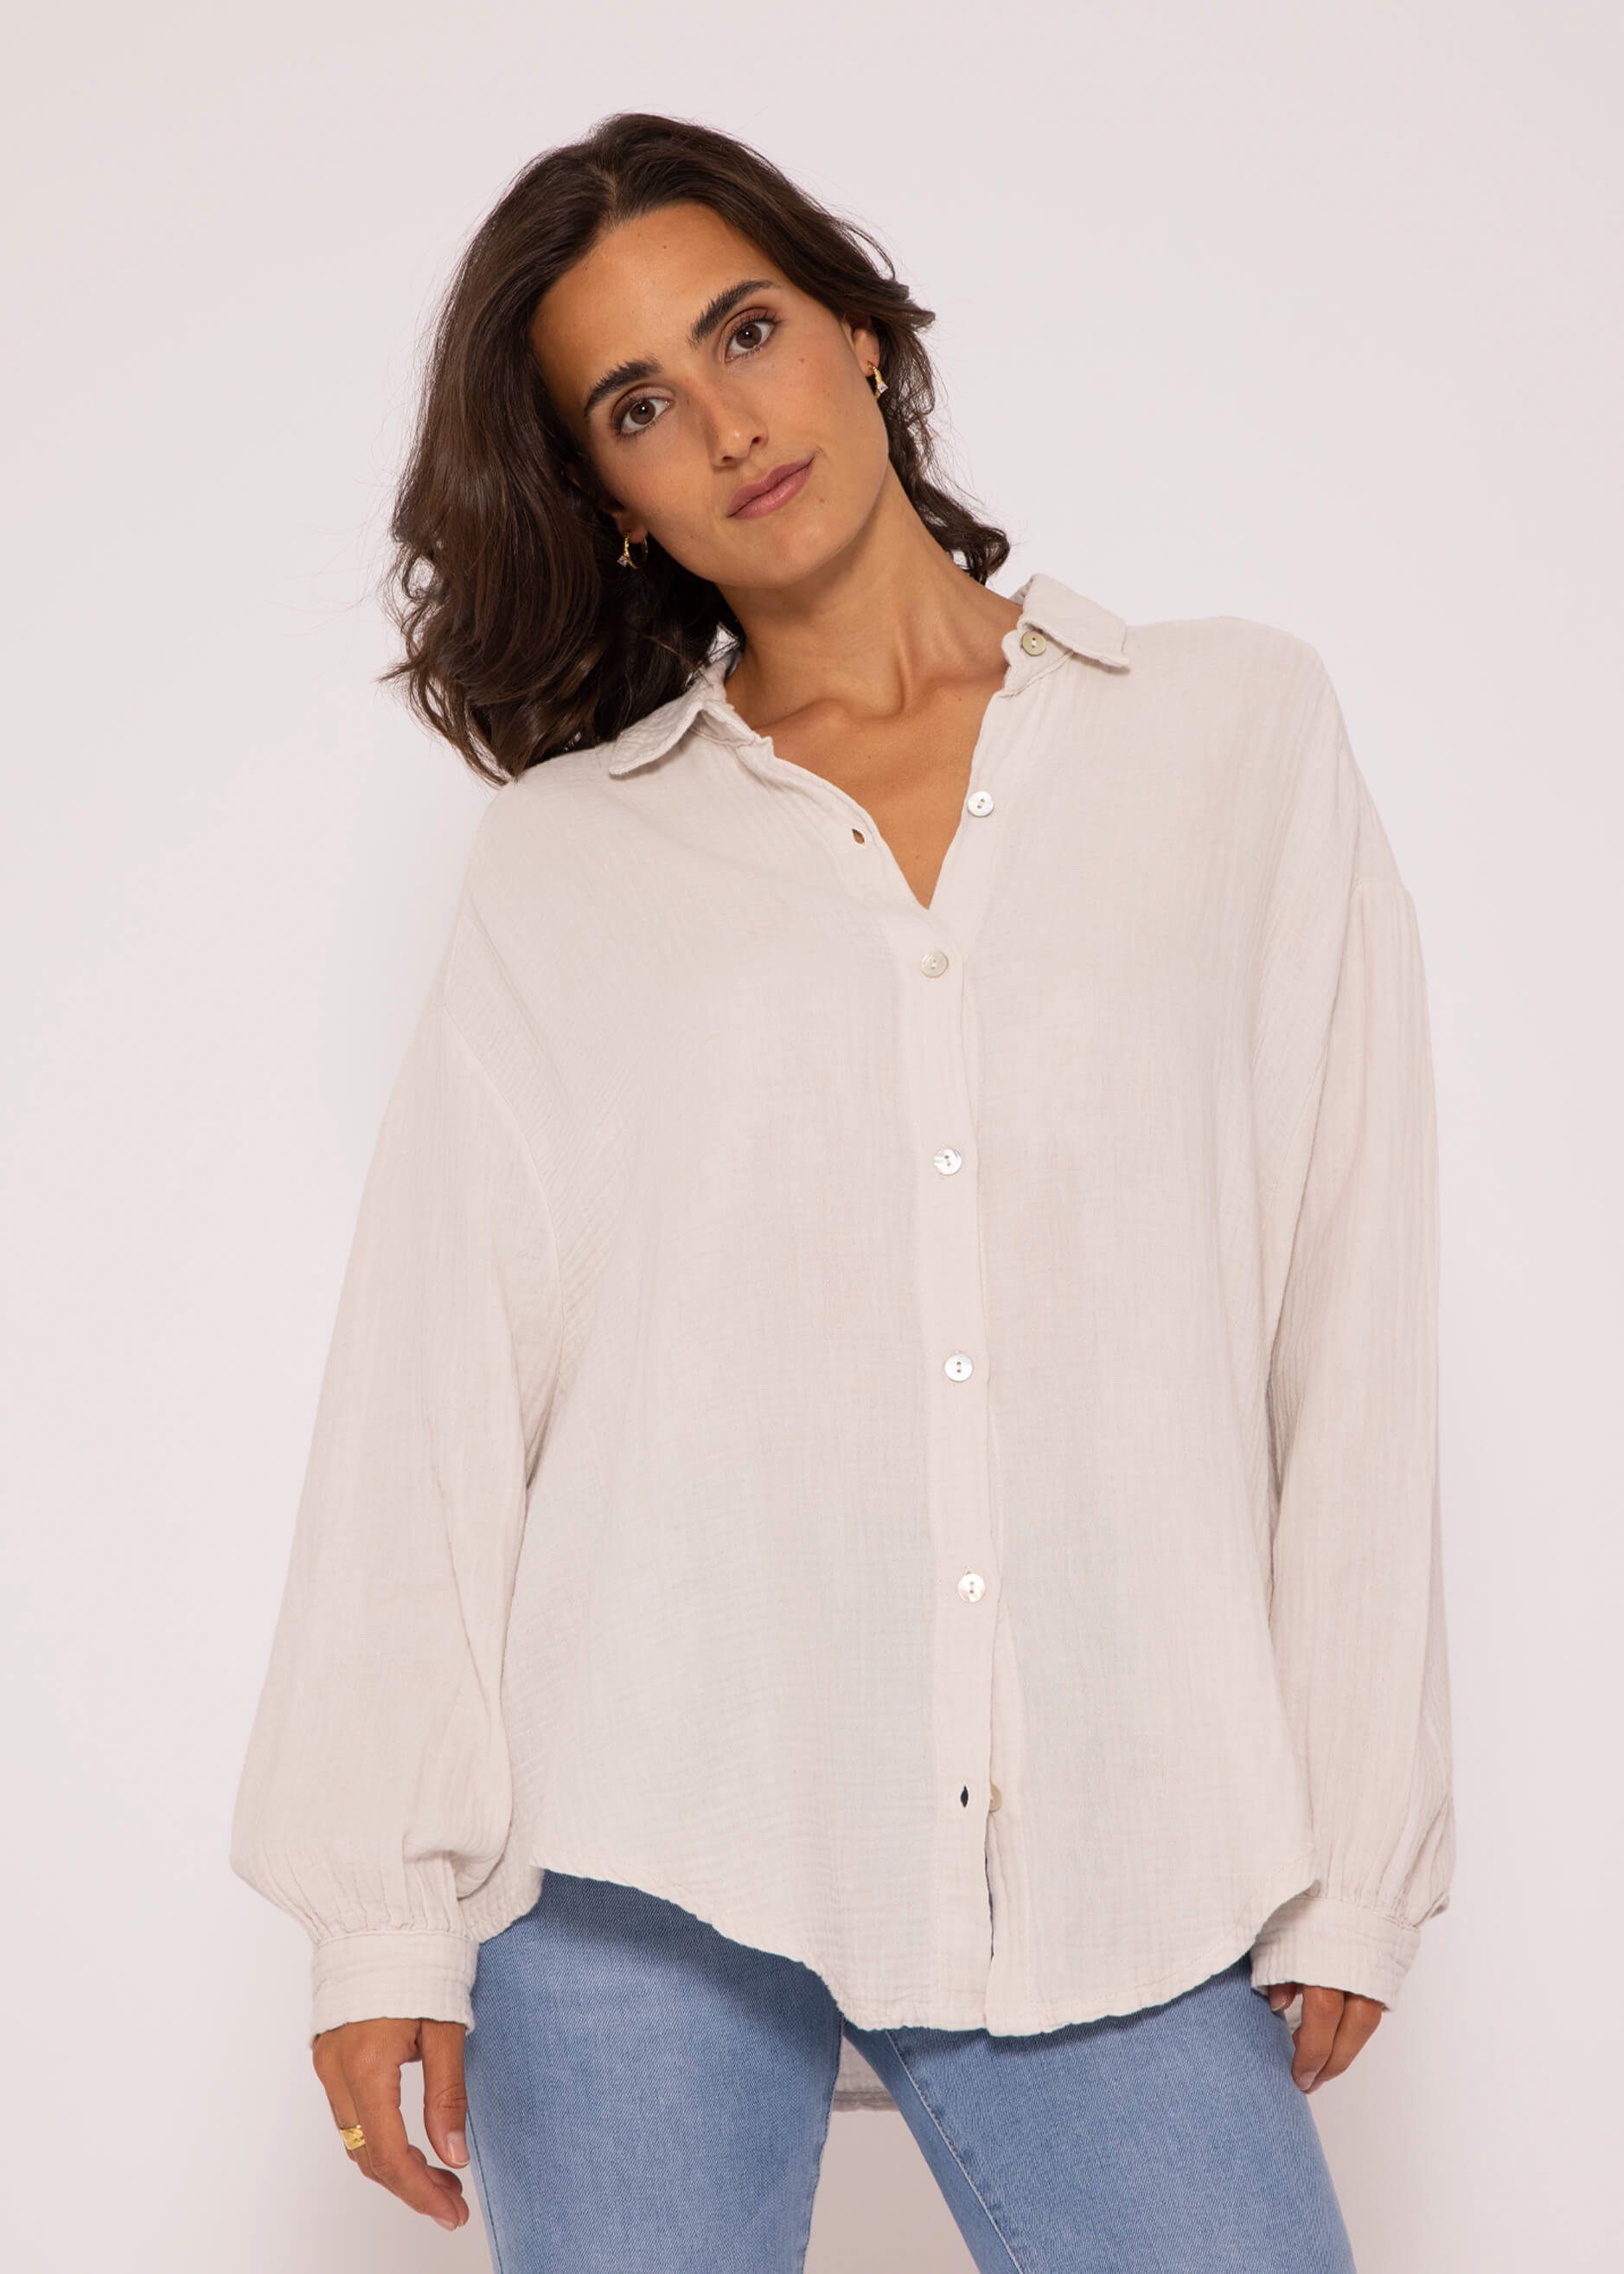 SASSYCLASSY Longbluse Oversize Musselin Bluse Damen Langarm Hemdbluse lang aus Baumwolle mit V-Ausschnitt, One Size (Gr. 36-48) Hellbeige